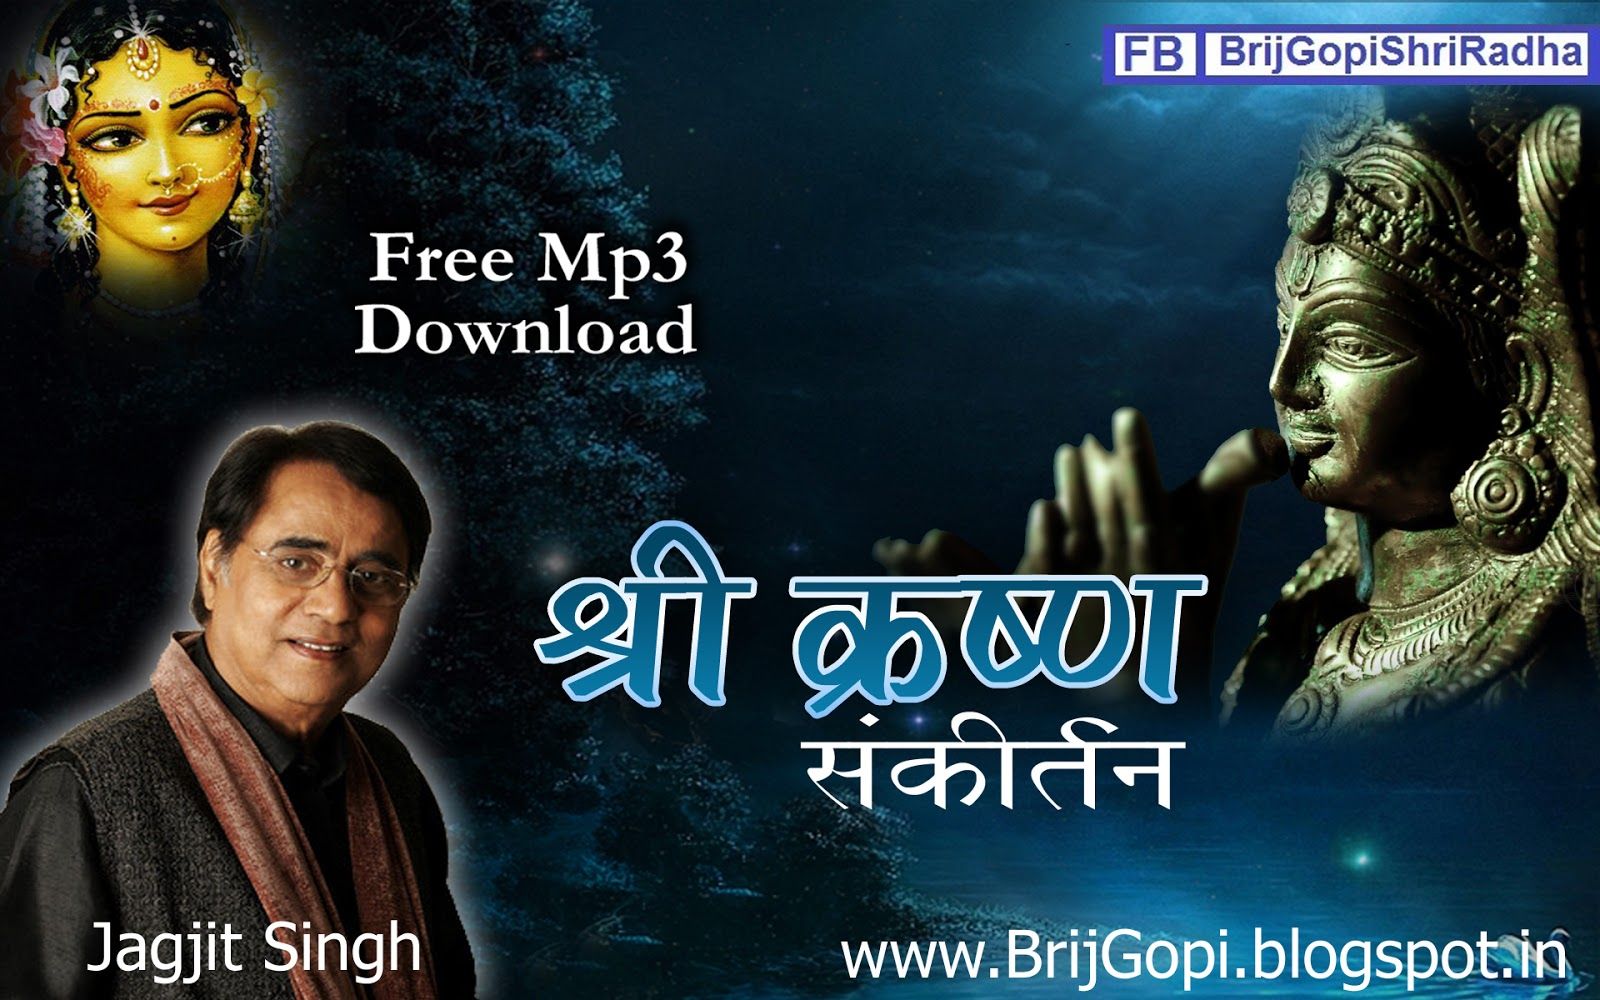 hare krishna mantra mp3 free download